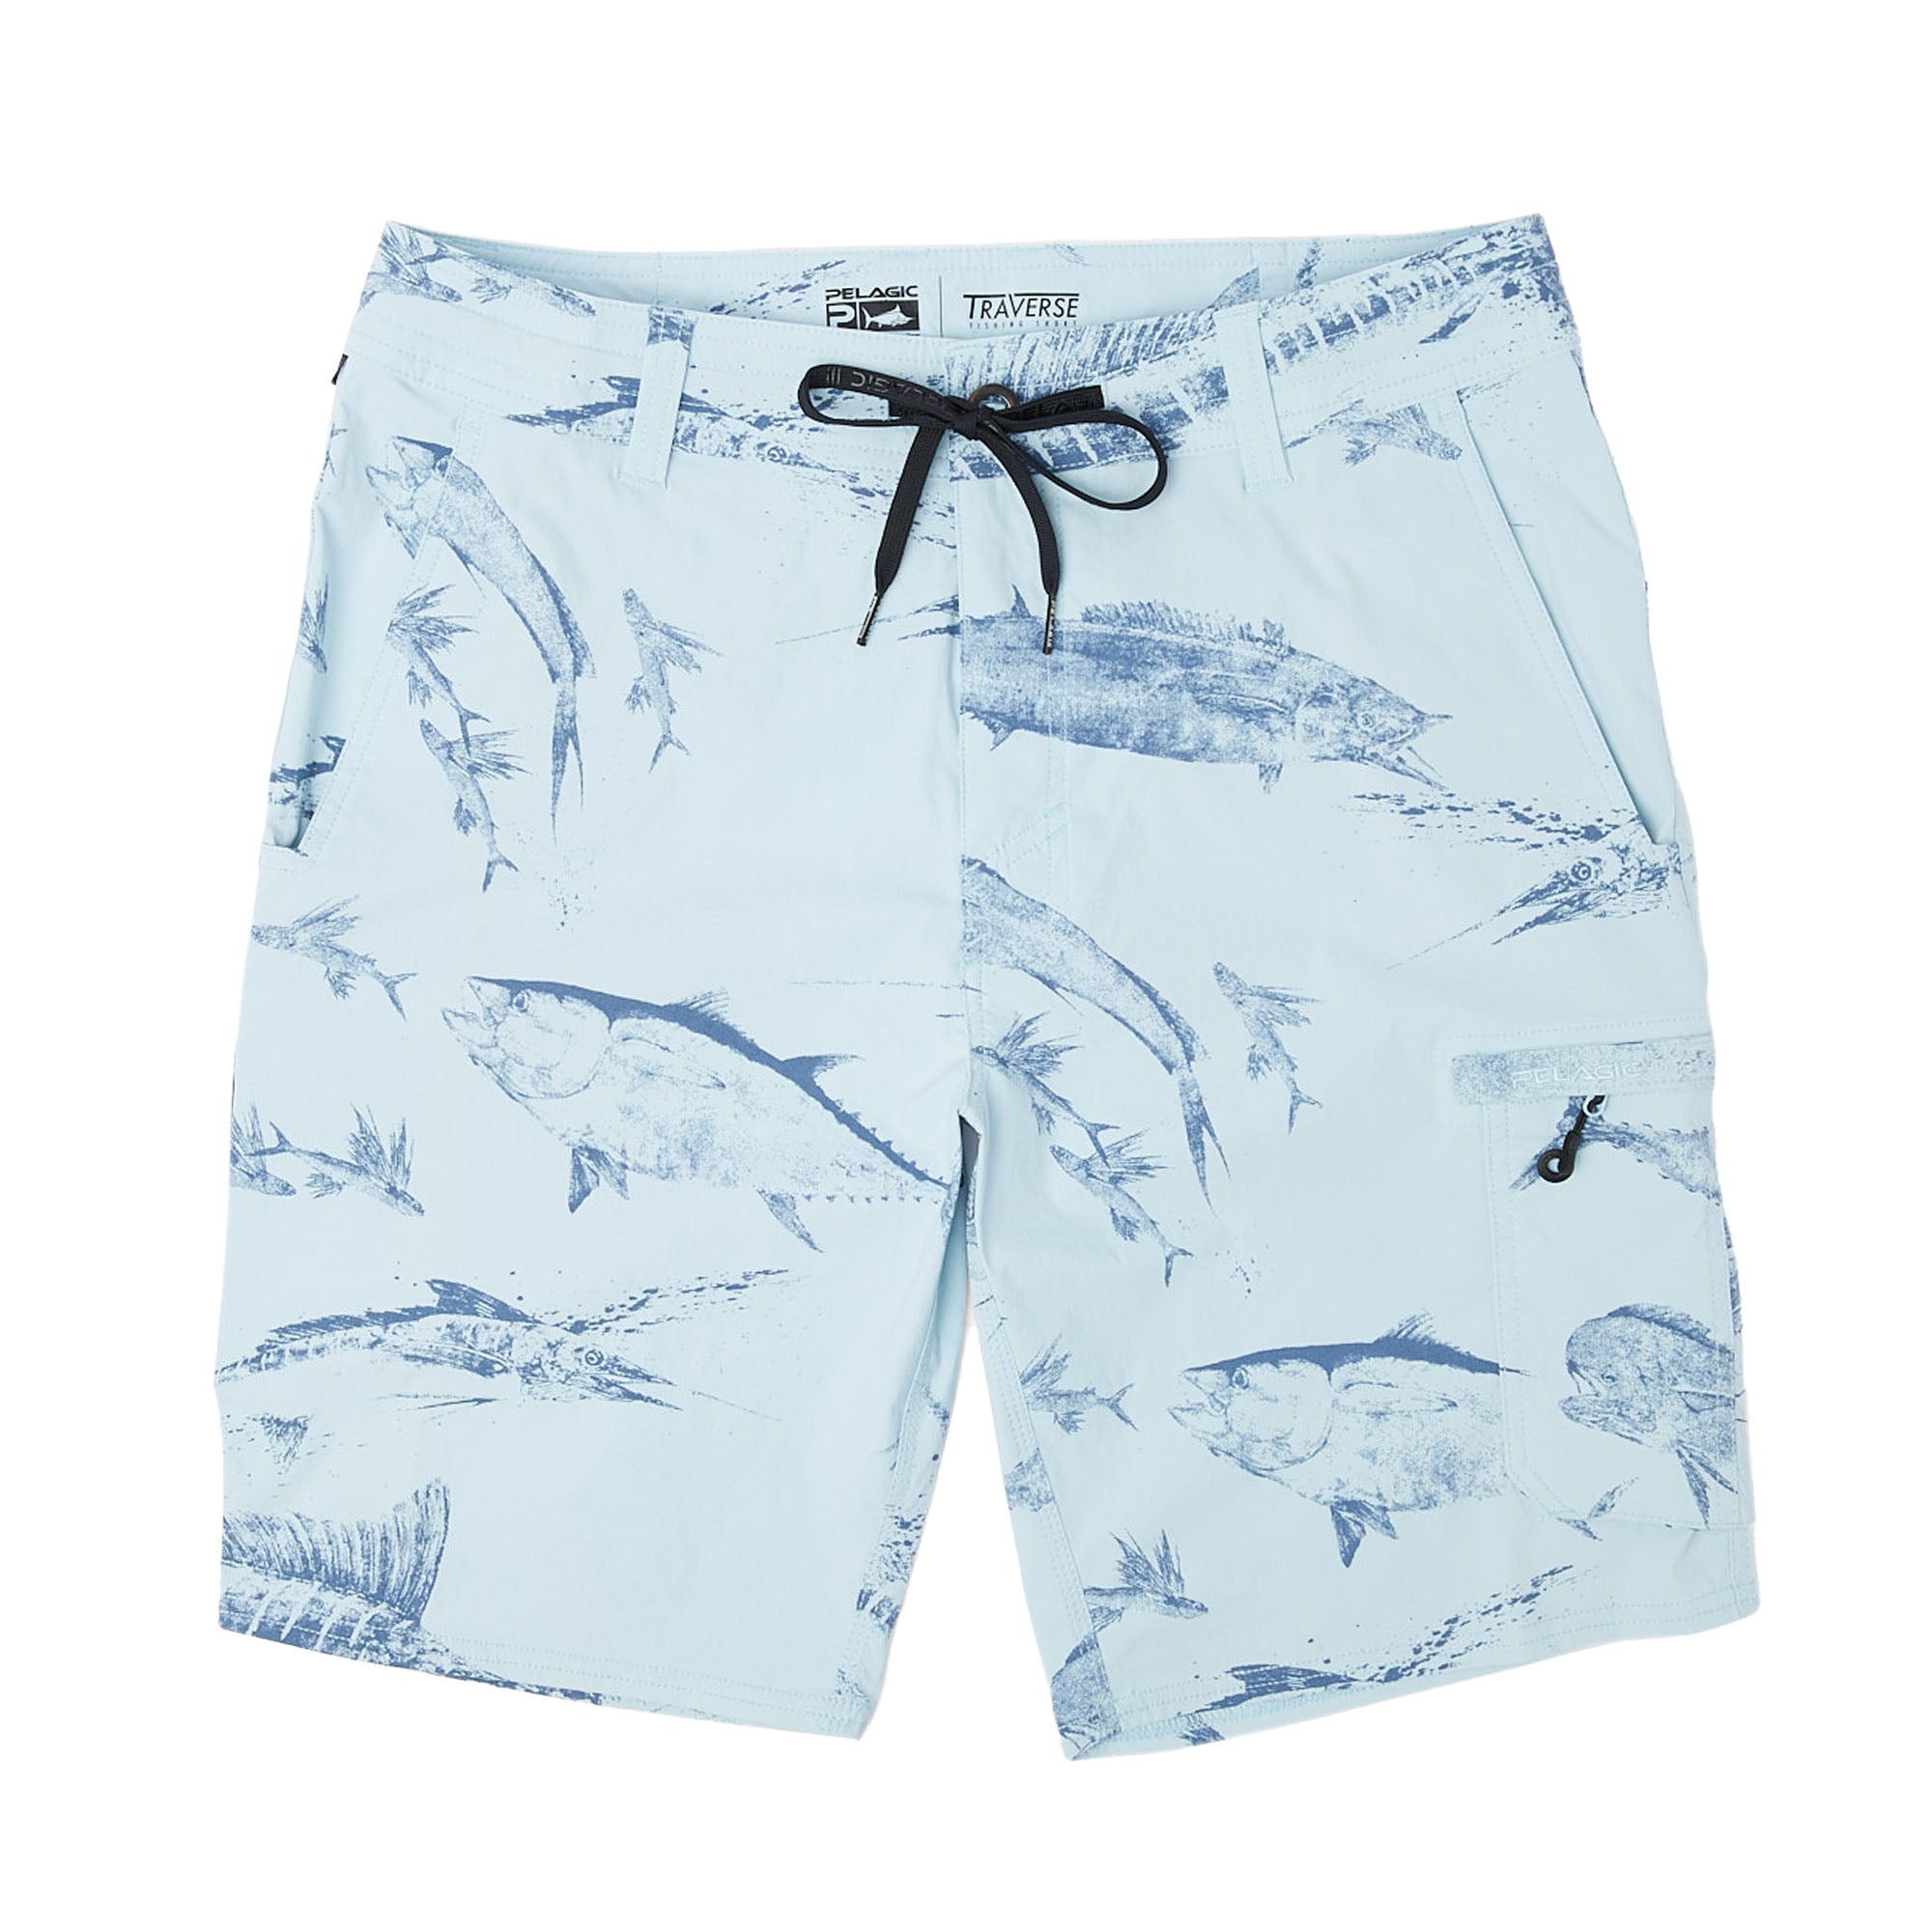 Pelagic Traverse Hybrid Shorts 20 32 / Gyotaku Light Blue